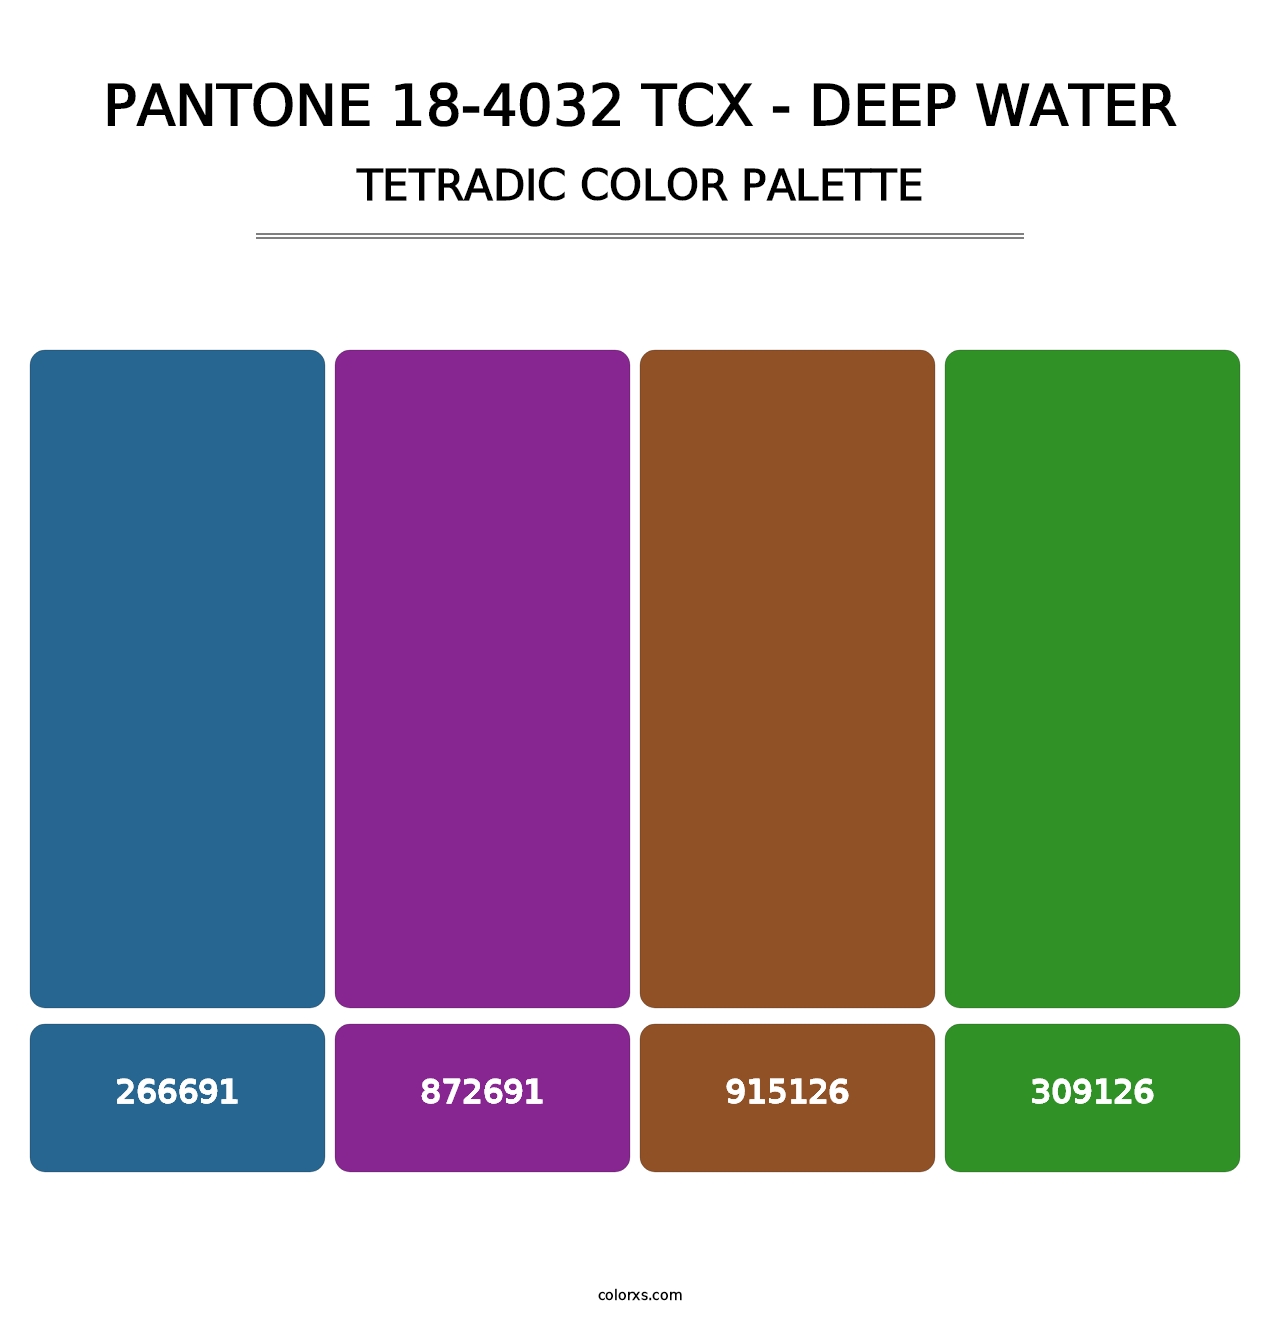 PANTONE 18-4032 TCX - Deep Water - Tetradic Color Palette